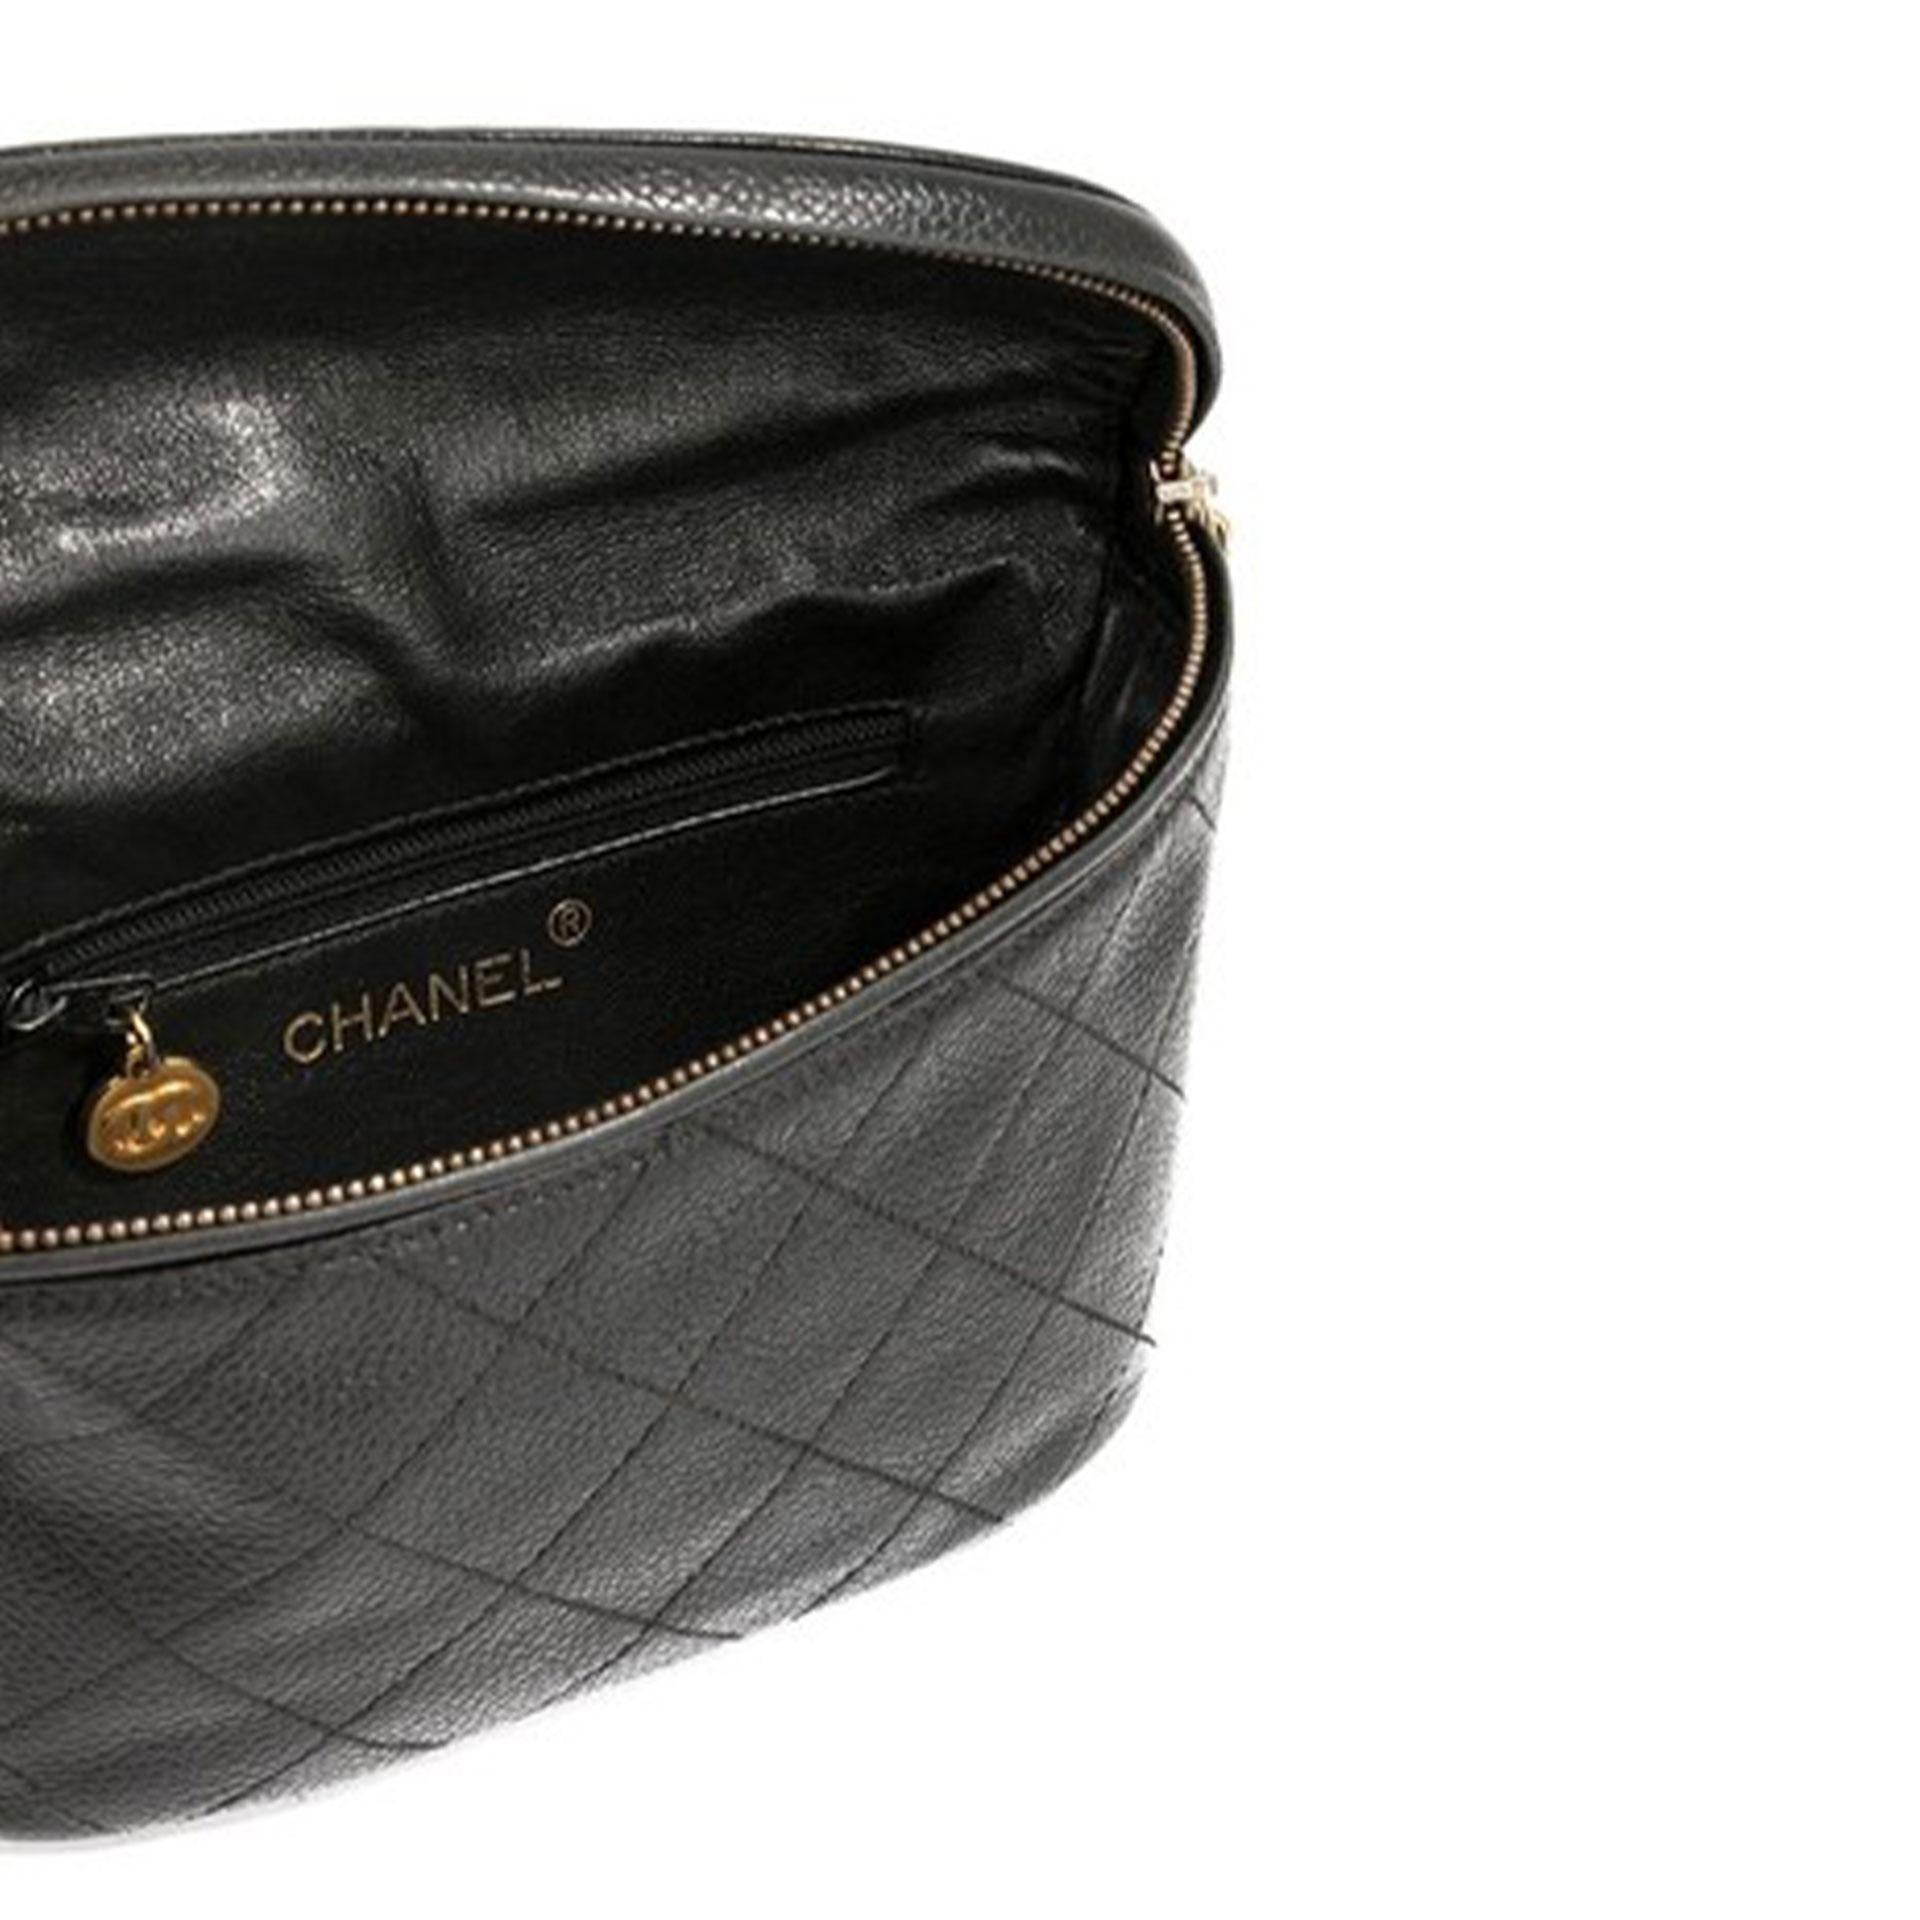 Chanel Belt Rare Vintage 1995 Caviar Fanny Pack Waist Bum Black Leather Bag For Sale 2